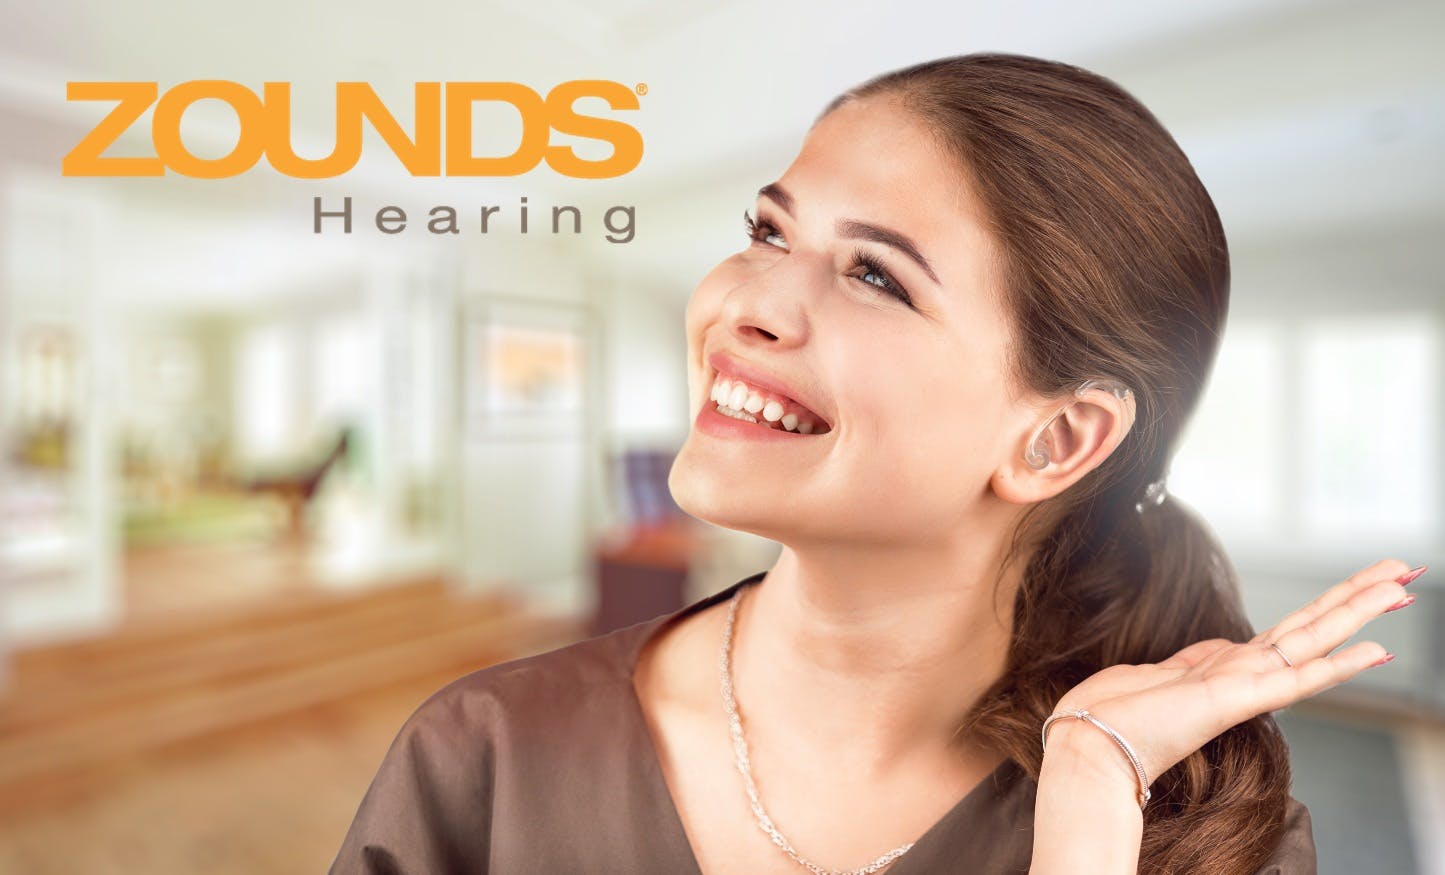 Zounds Hearing Aids Review: Better Zounds & Hearing